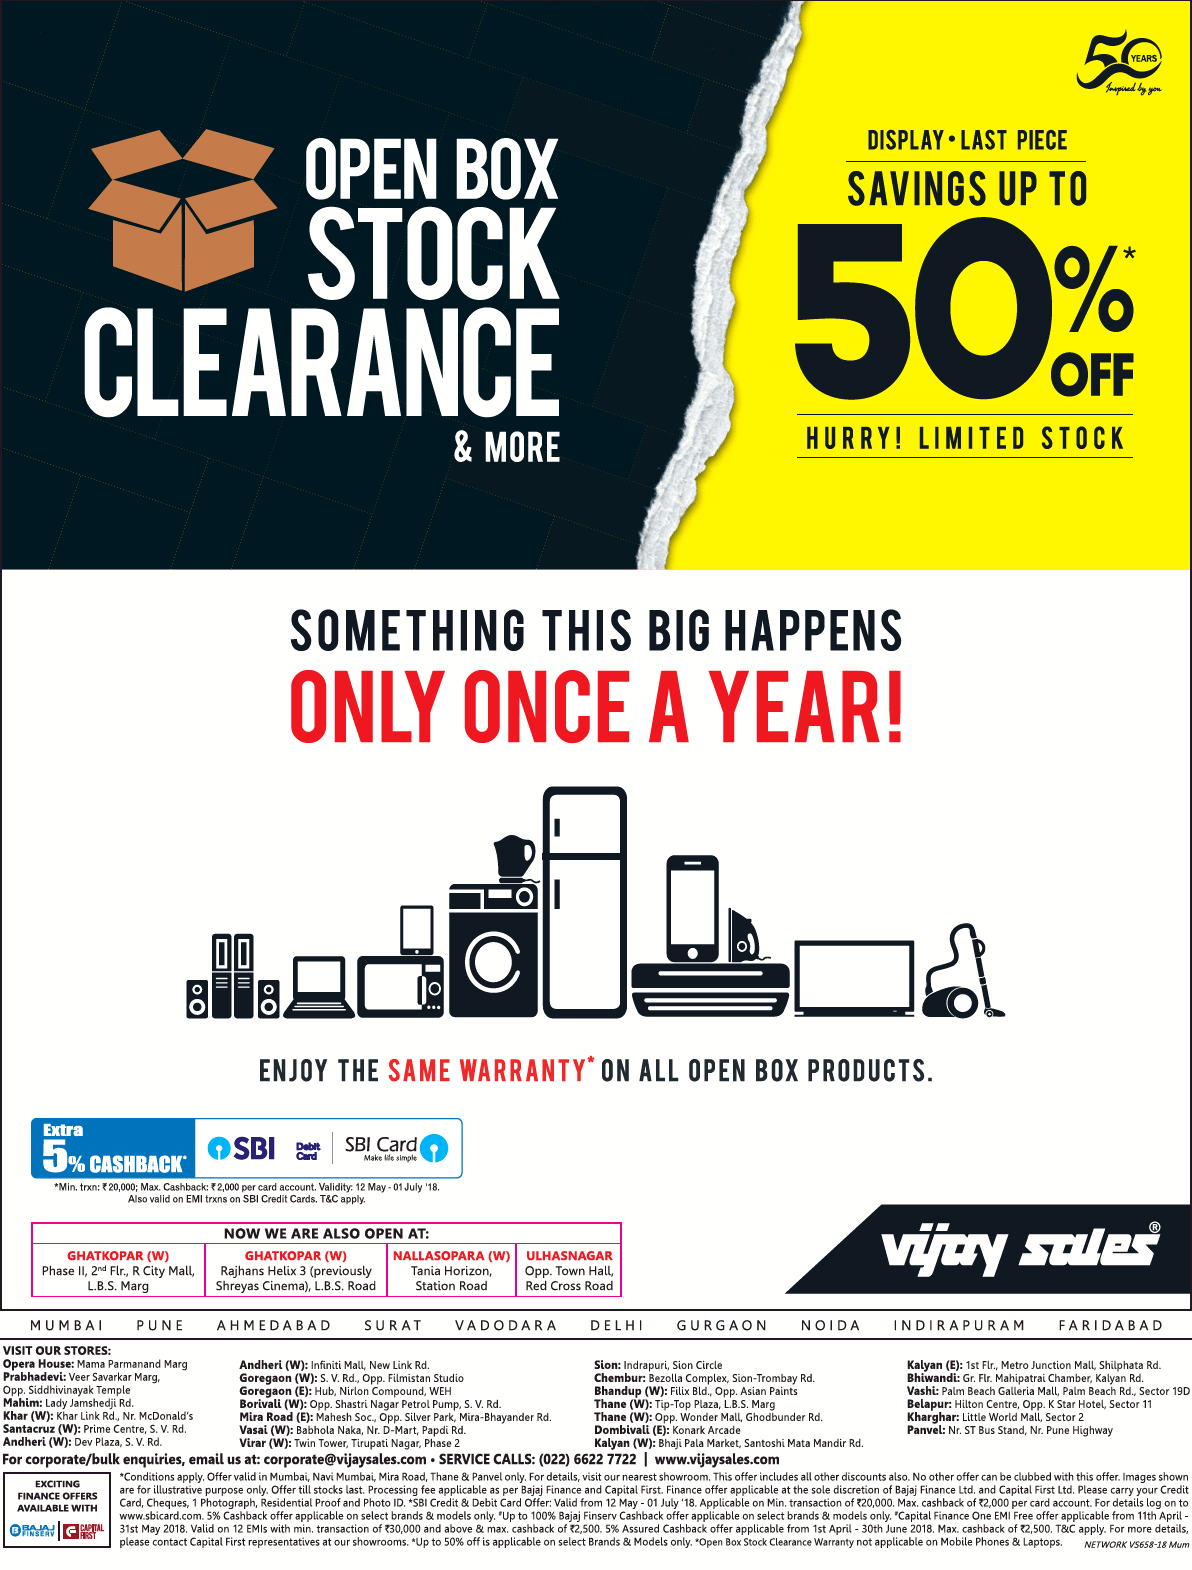 reebok stock clearance sale